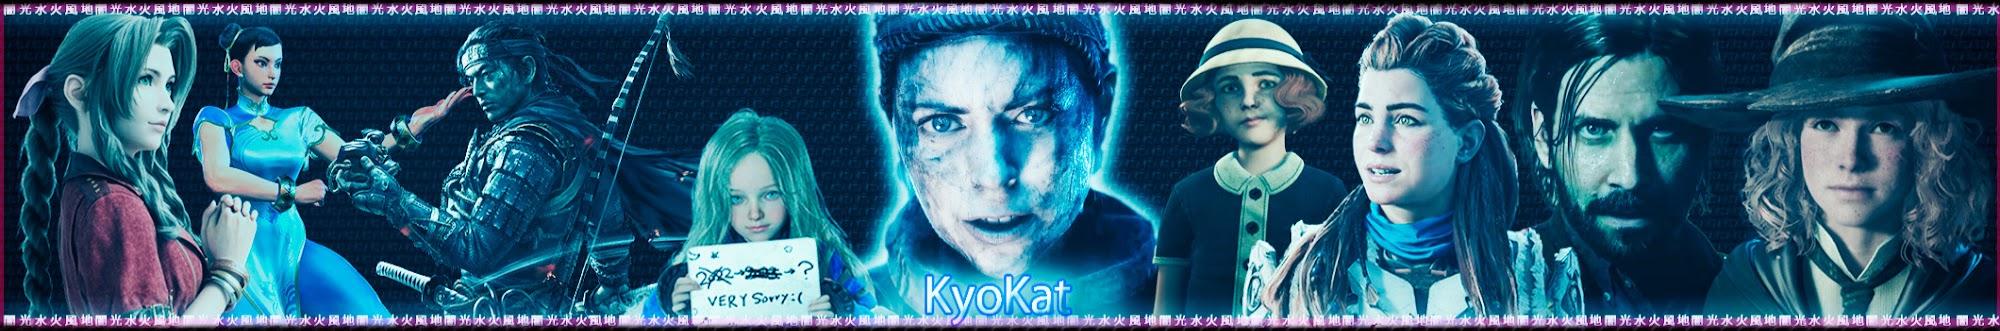 KyoKat PC Gameplay | Benchmark